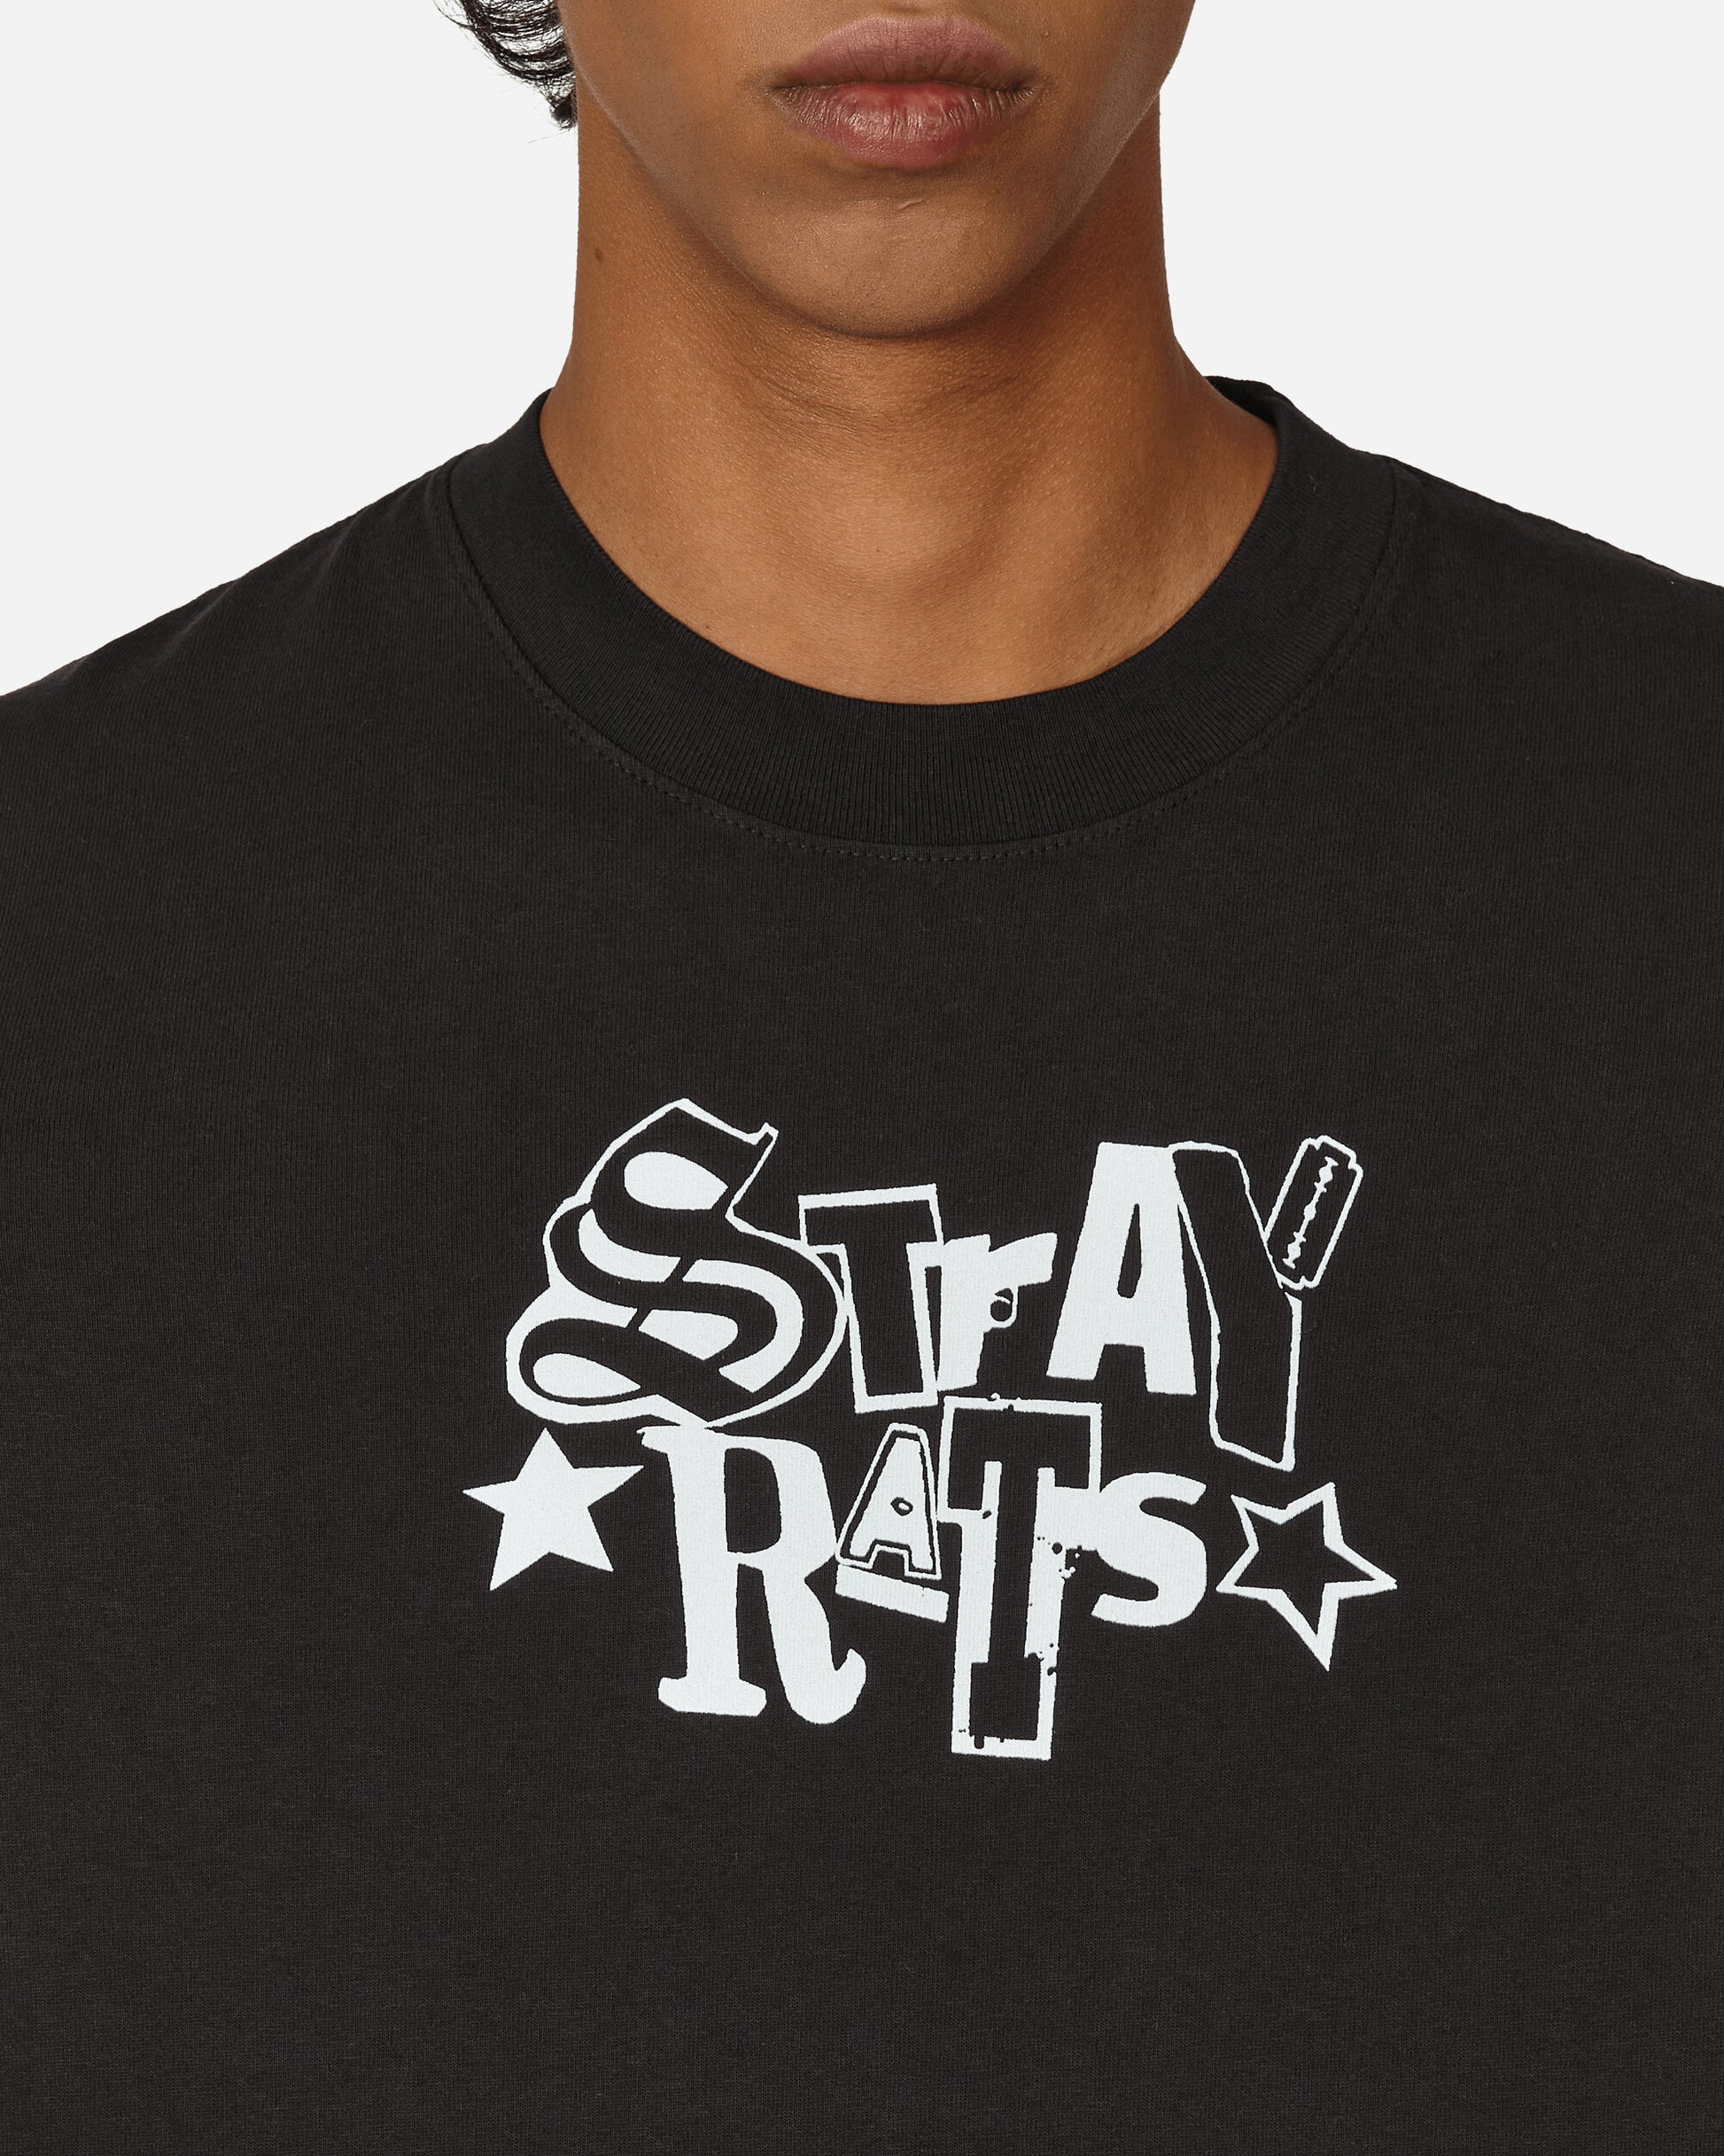 Stray Rats Cut Out Tee Black T-Shirts Shortsleeve SRT1166 BLACK